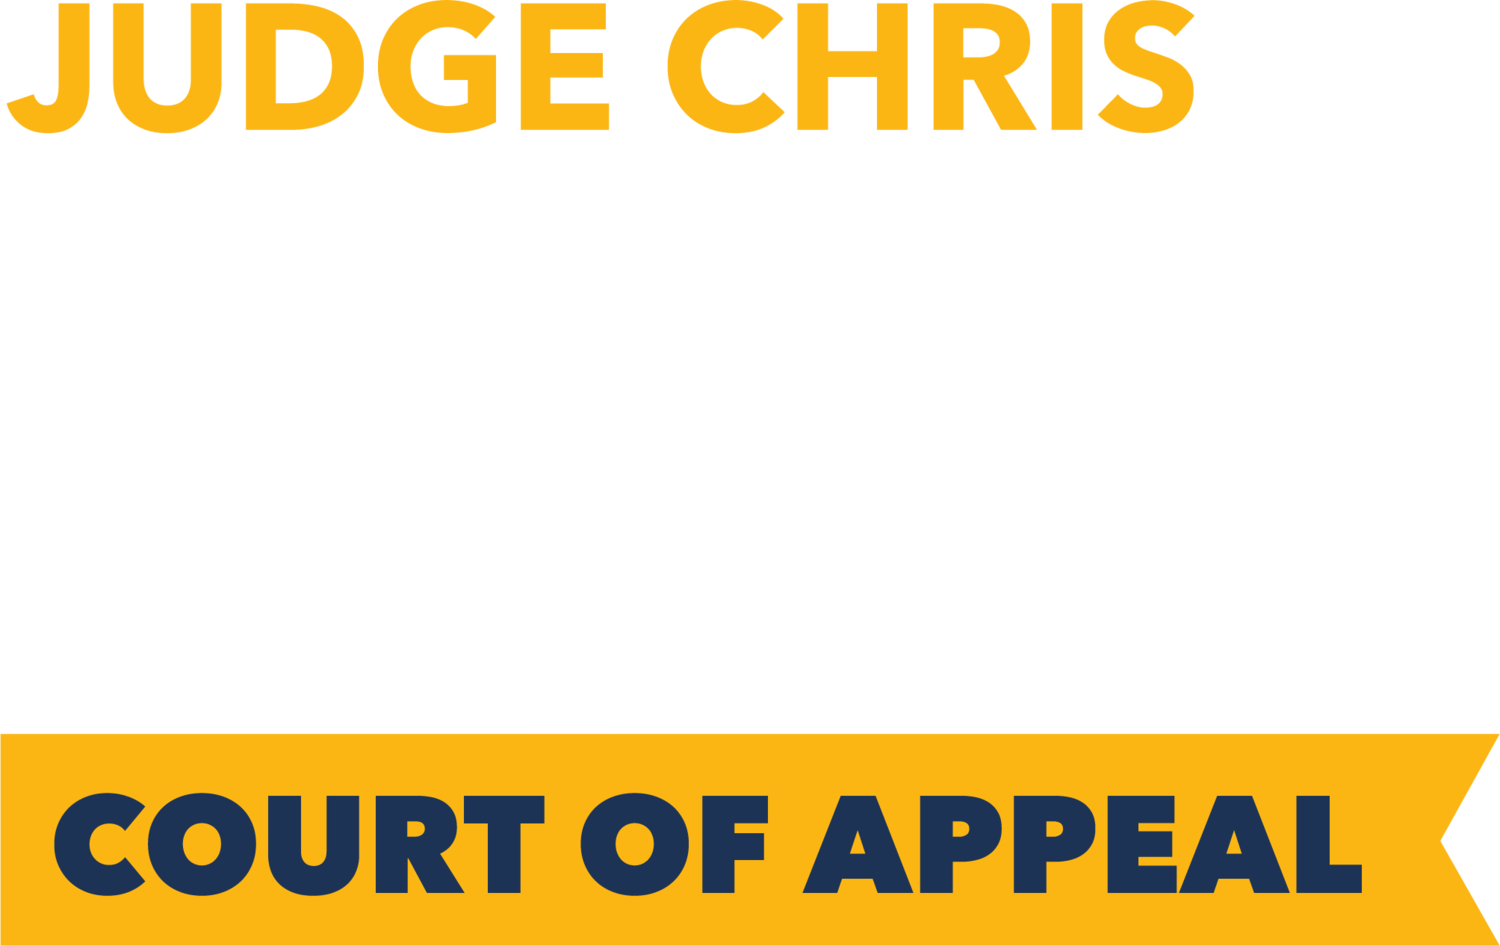 Chris Hester for Judge